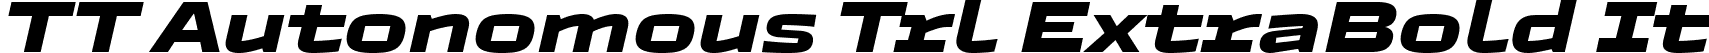 TT Autonomous Trl ExtraBold It font - TT-Autonomous-Trial-ExtraBold-Italic.ttf